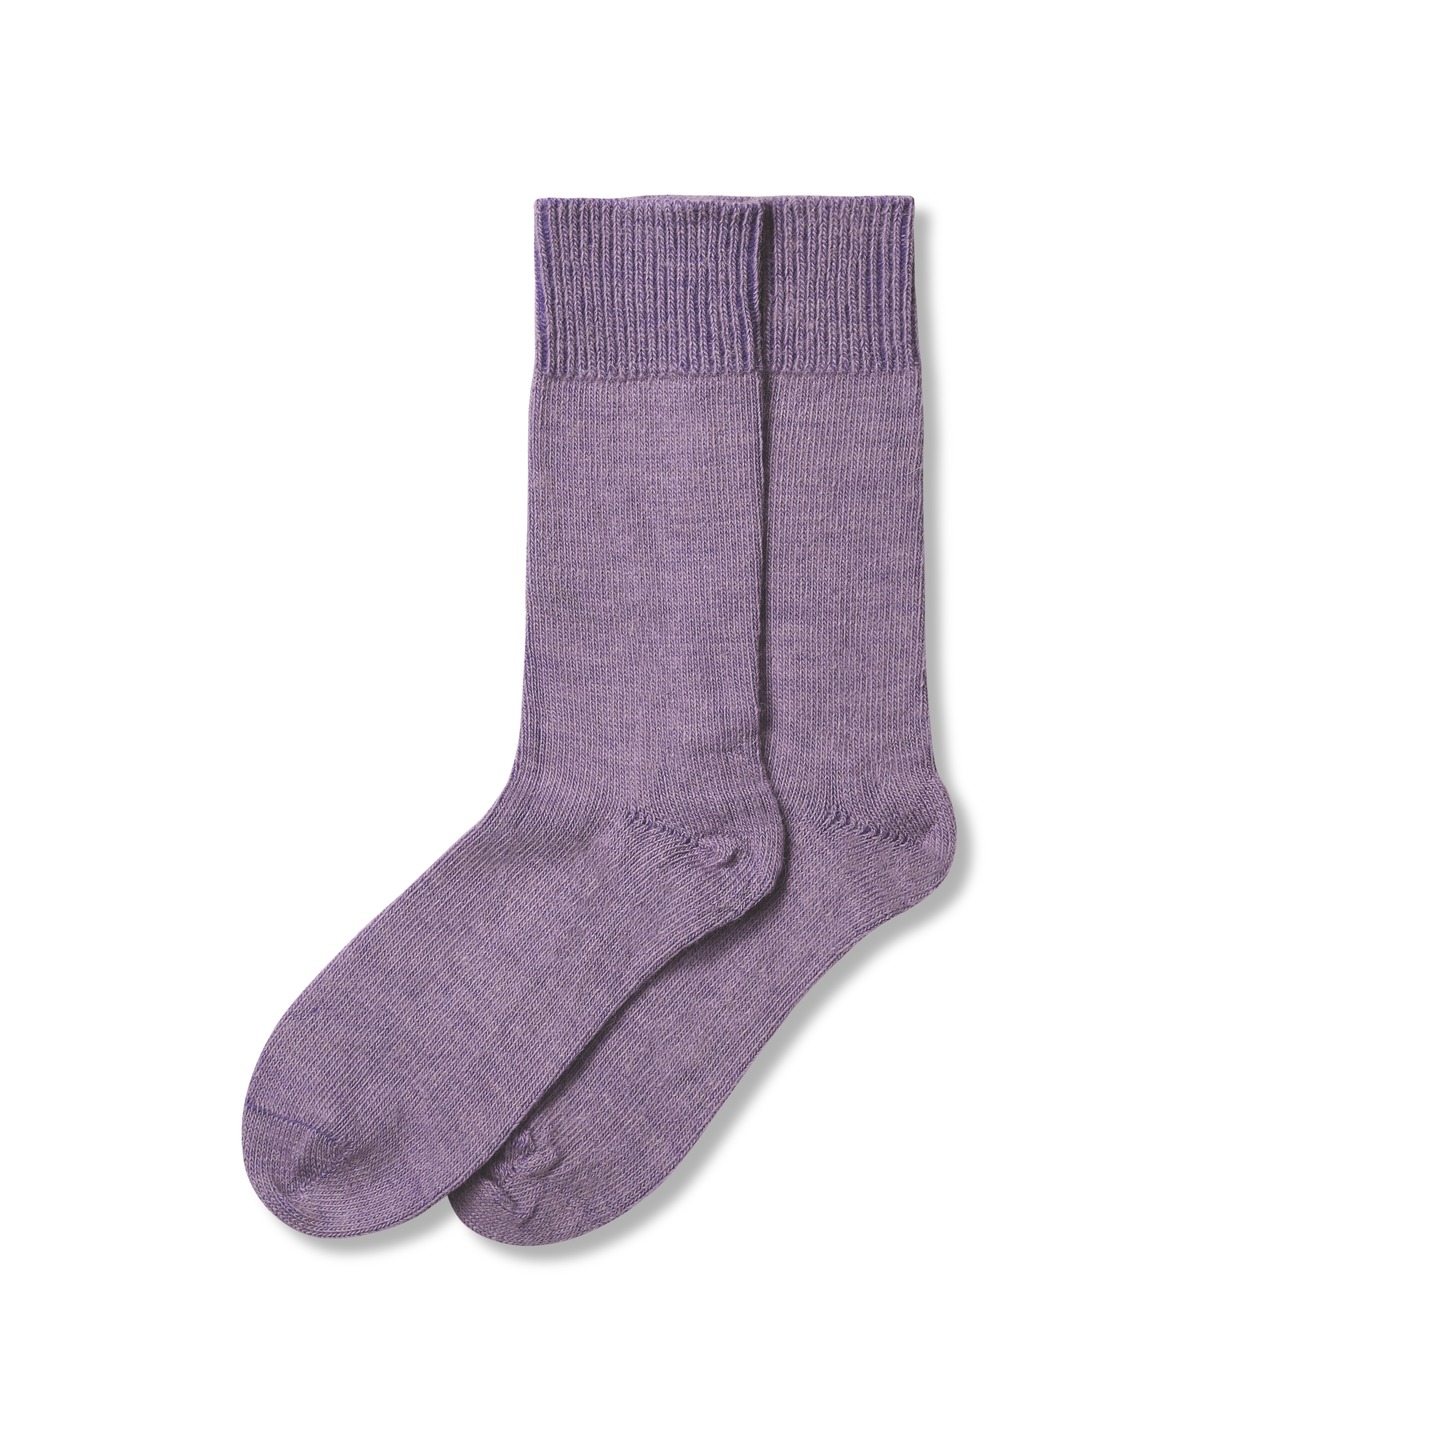 Alpaca > The Girton | The Cambridge Sock Company